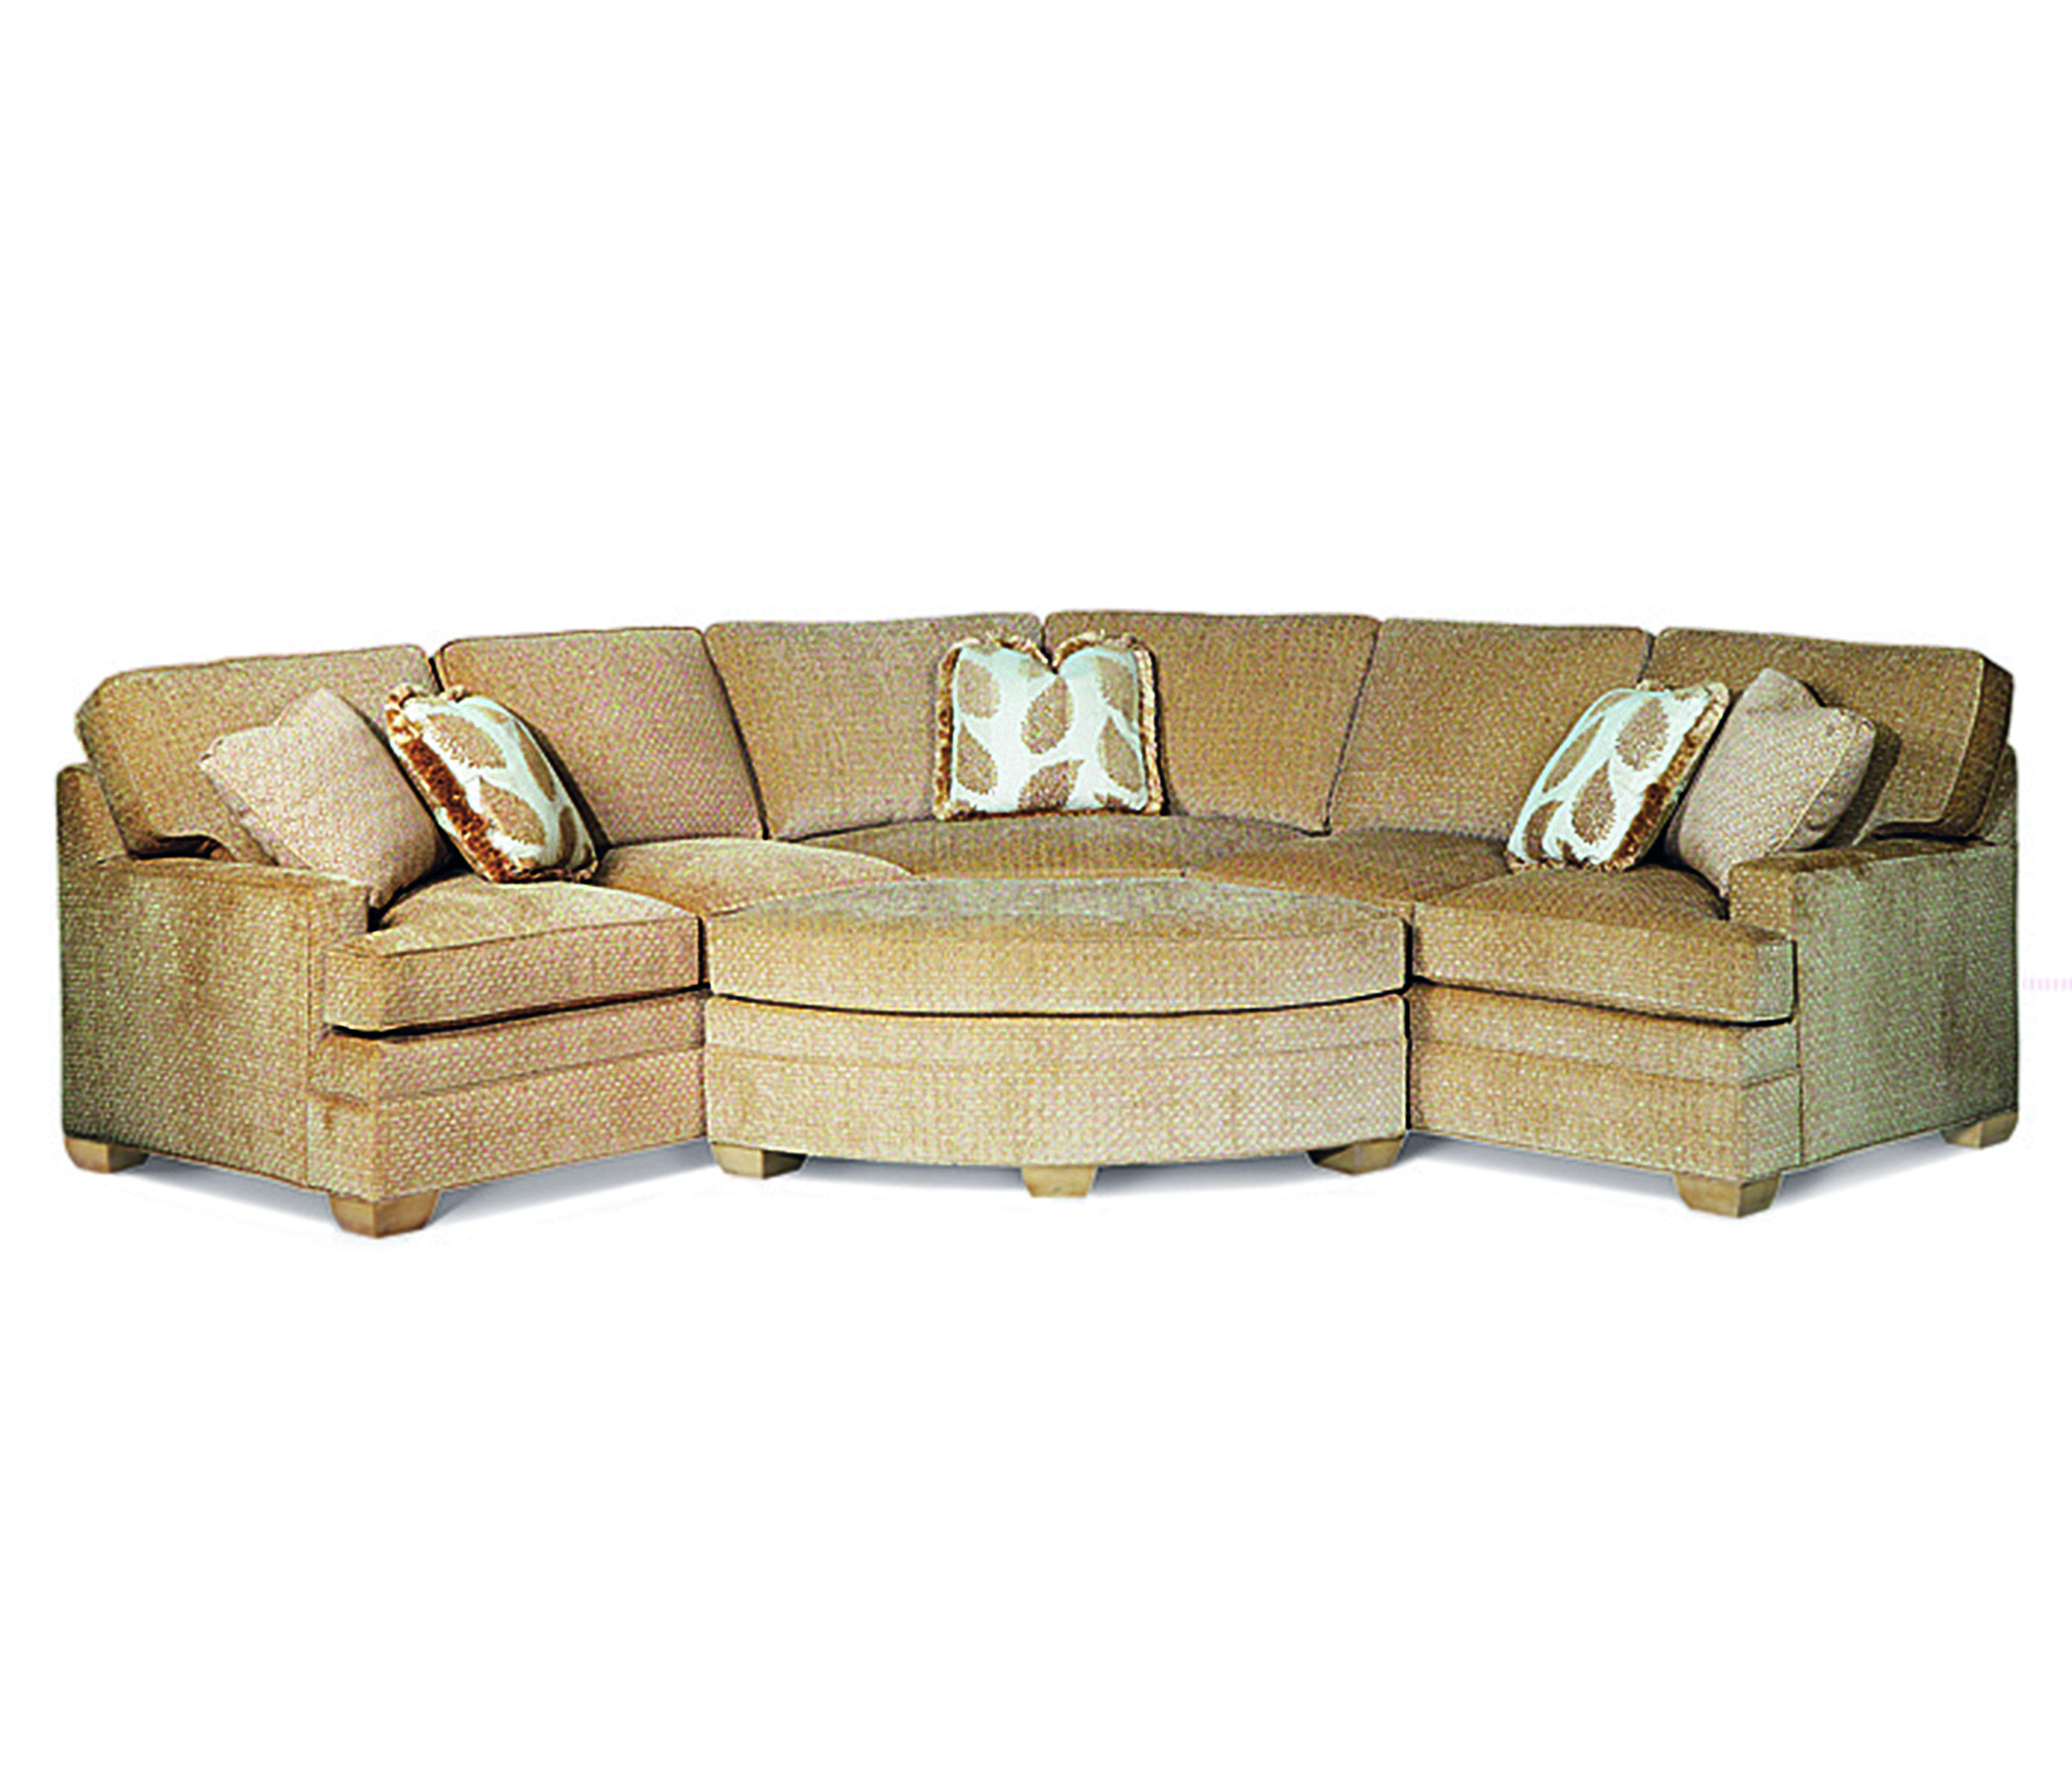 Taylor Made Standard Wedge Sofa